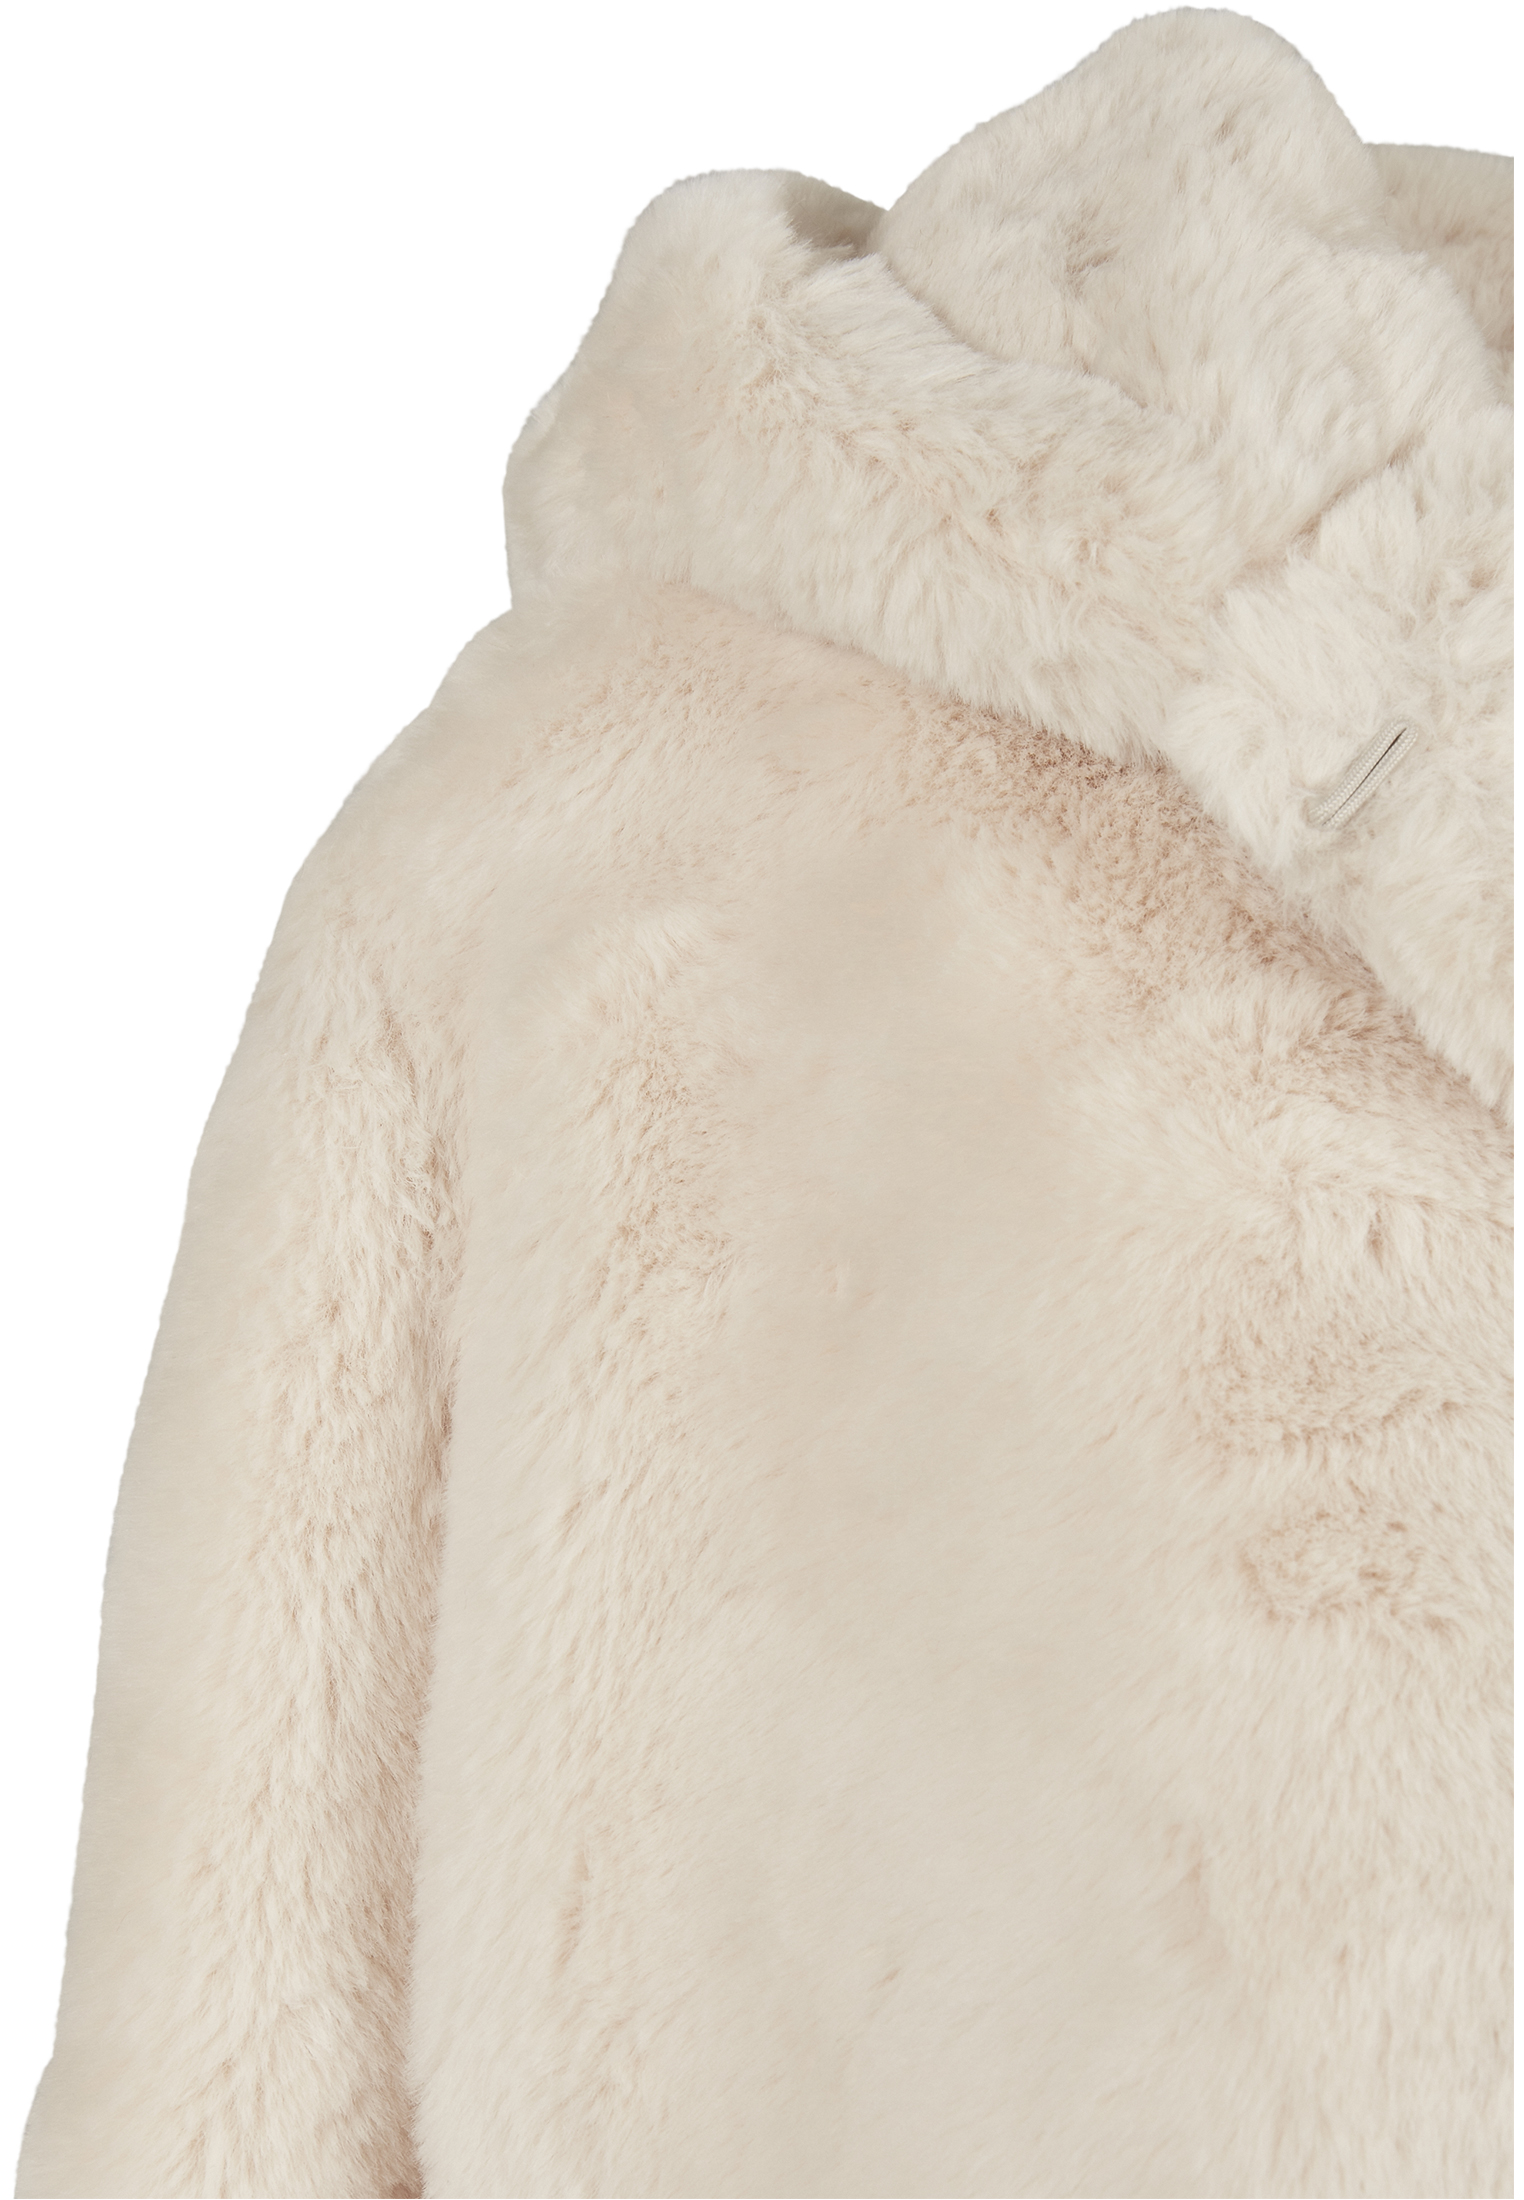 Winter Jacken Ladies Hooded Teddy Coat in Farbe offwhite